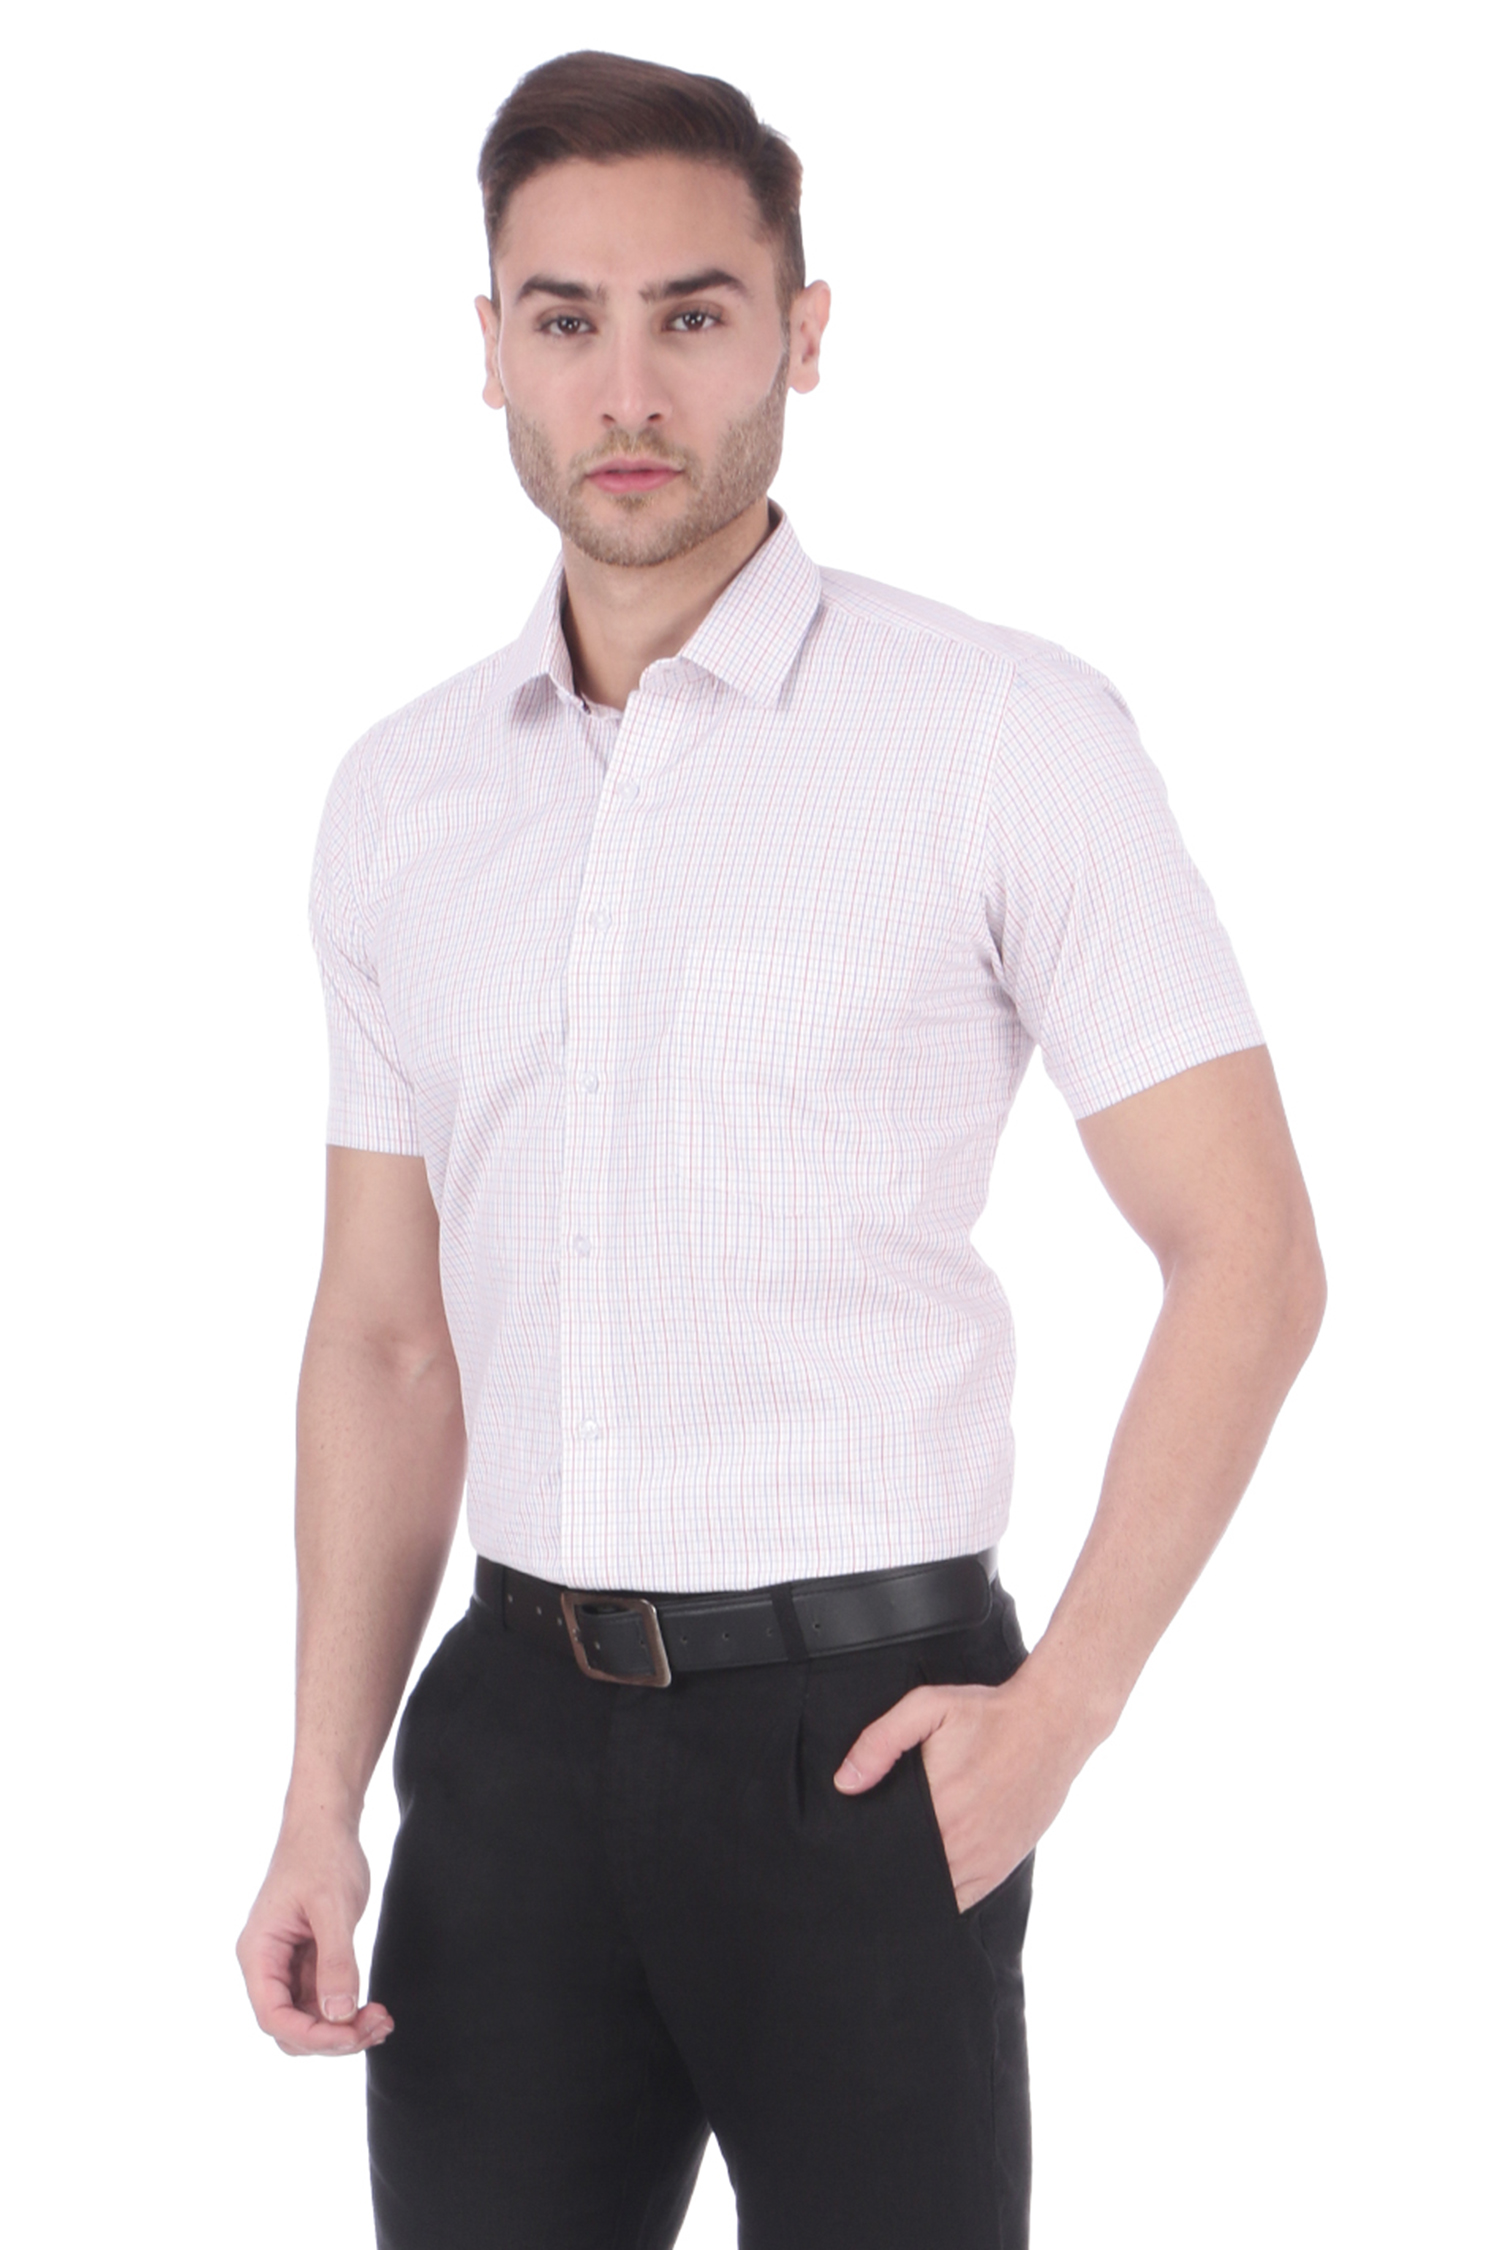 Buy Dudlind Men's Shirt - Formal Shirt - Checkered Shirt - Half Sleeves ...